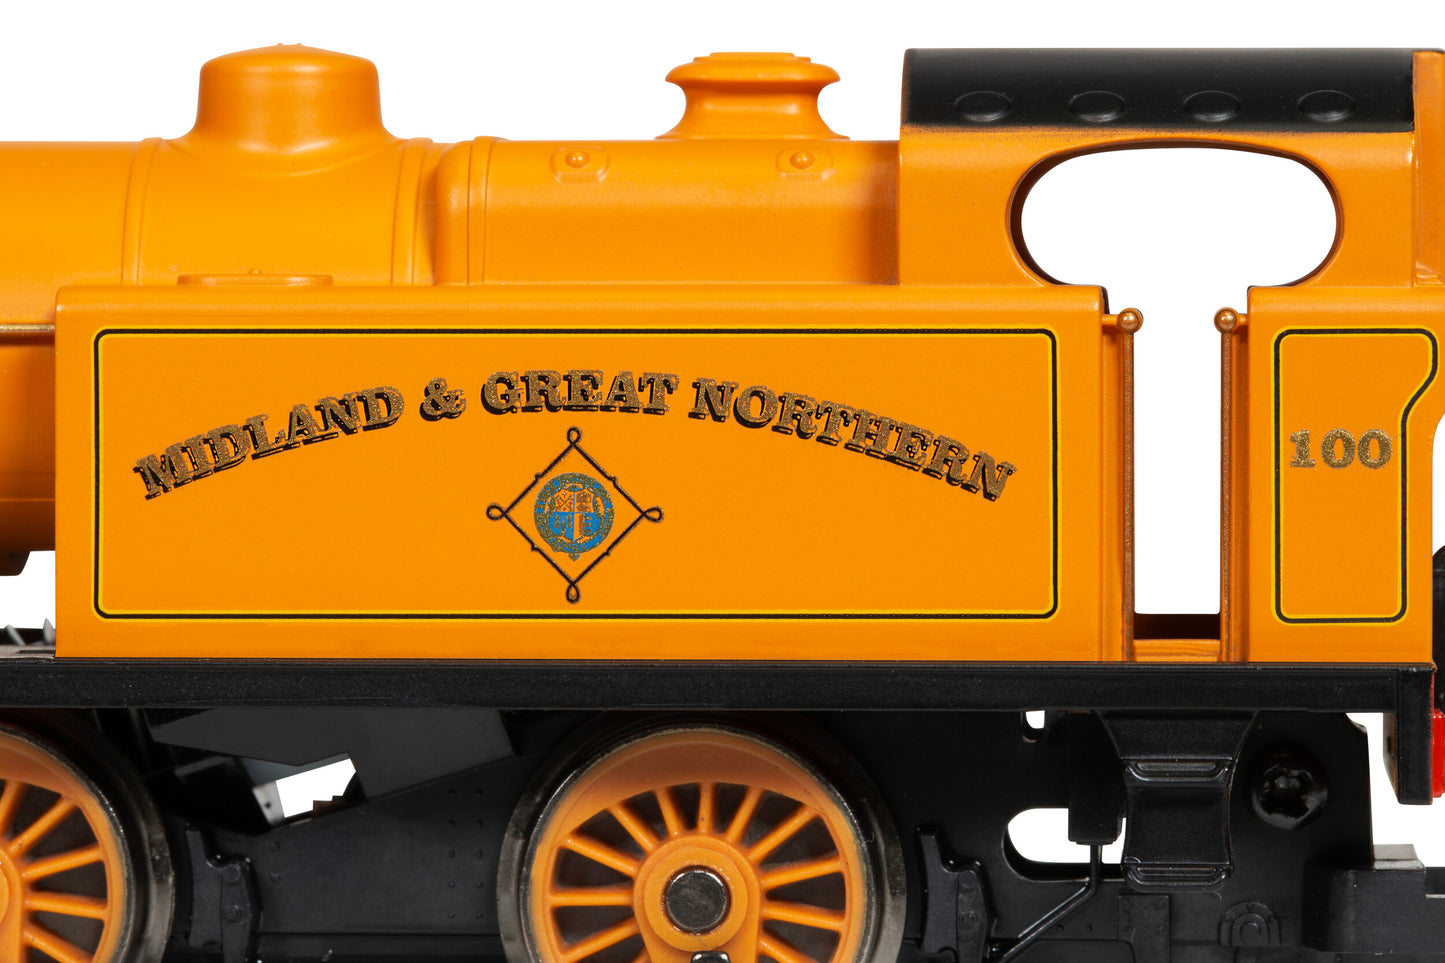 Hornby R30317 - 0-4-0 Locomotive 'Midland & Great Northern' No.100